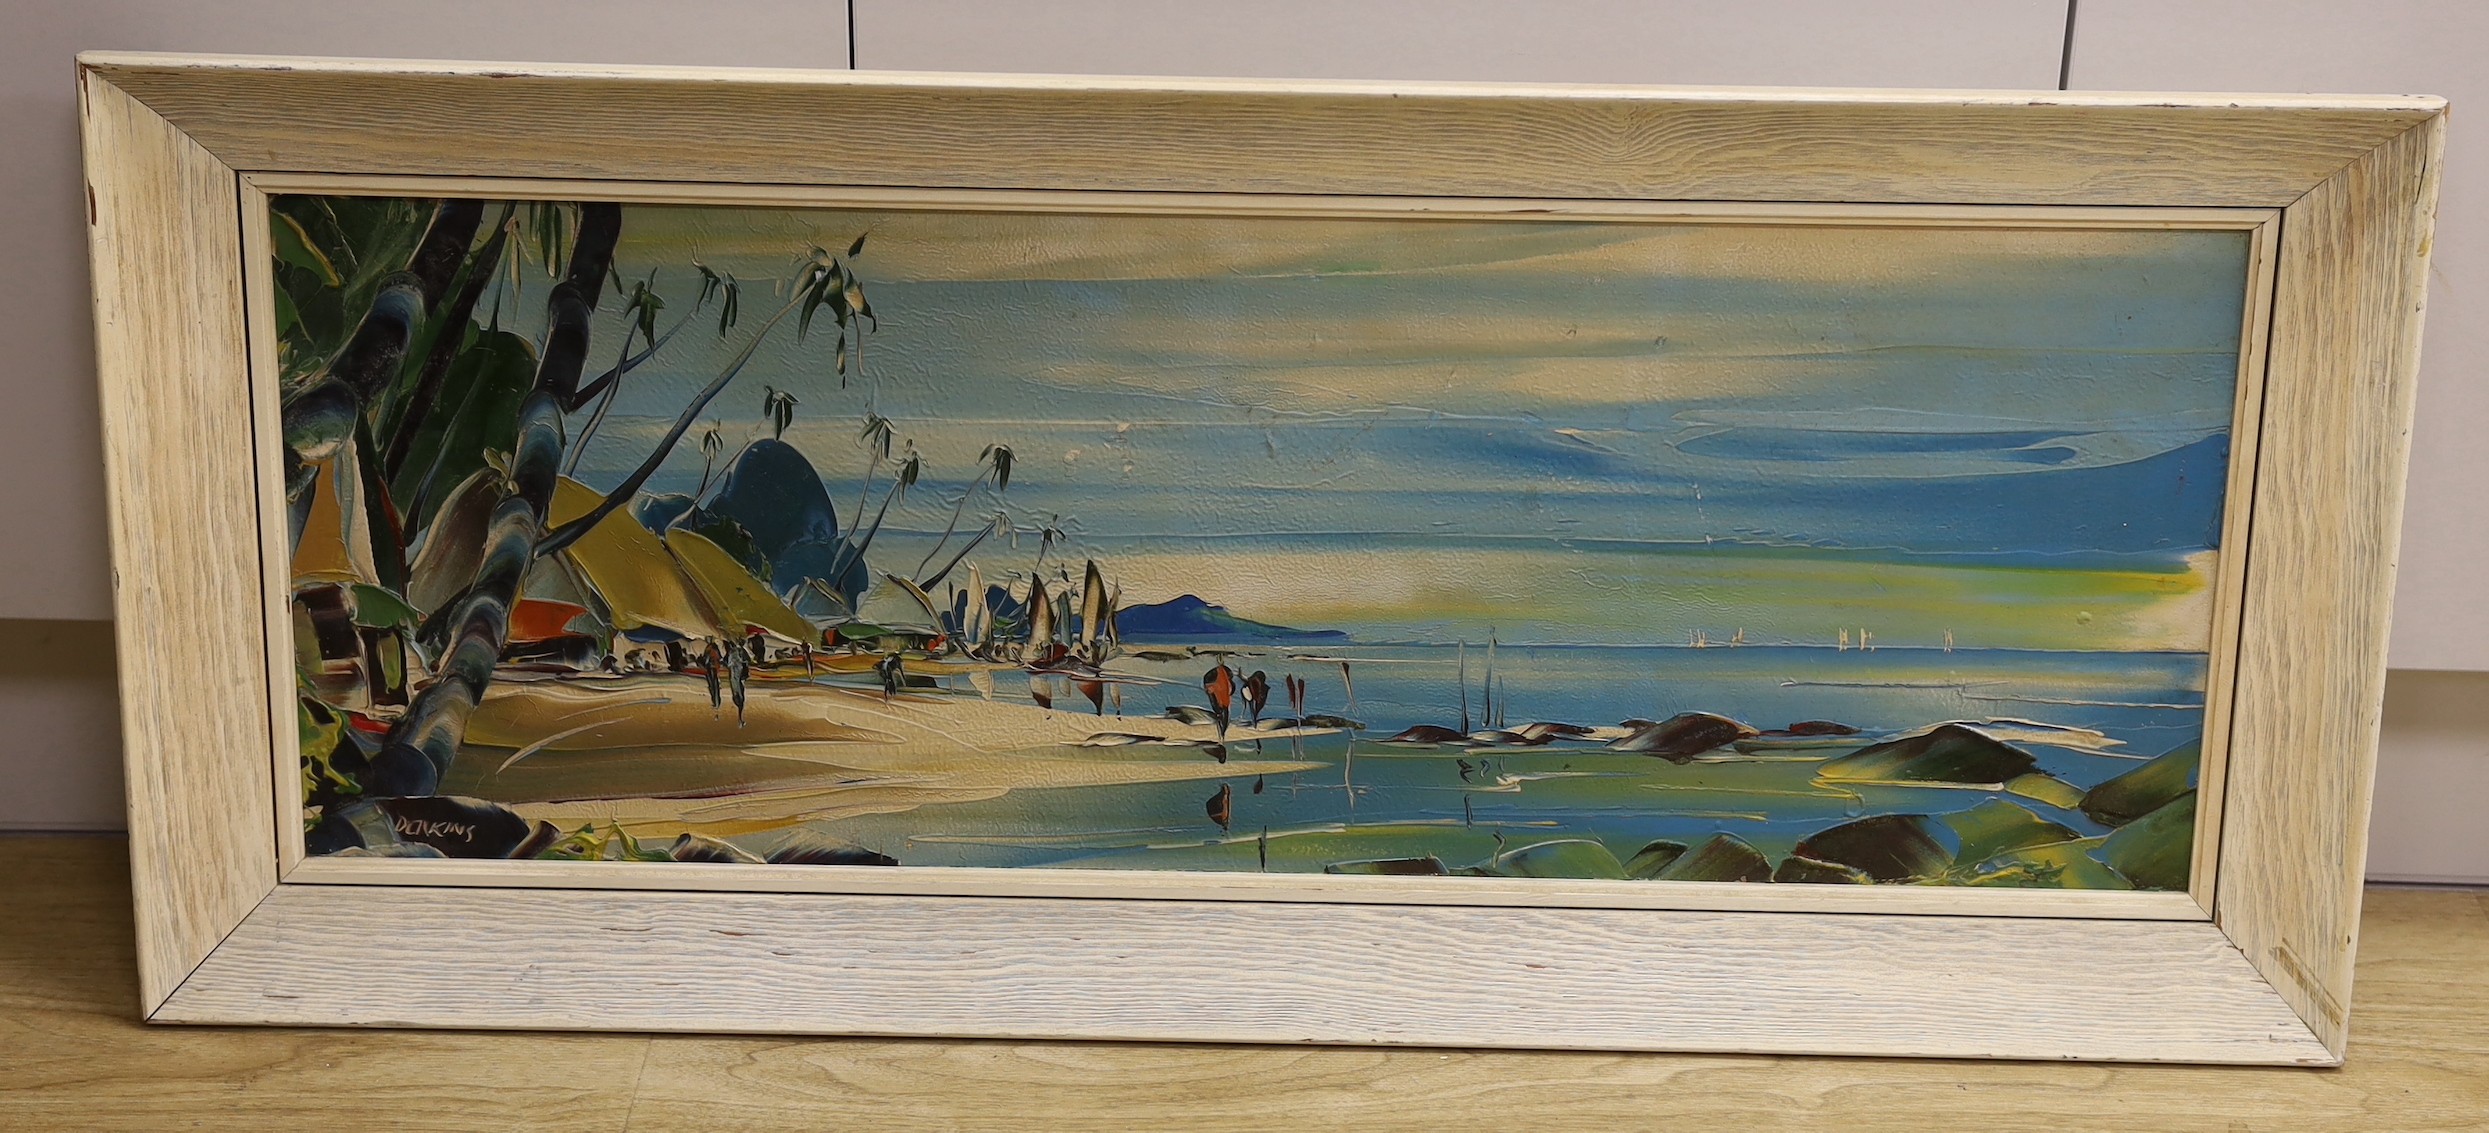 George Deakins (1911-1992), oil on board, 'Beach scene, St Lucia', signed, 30 x 83cm - Image 2 of 3